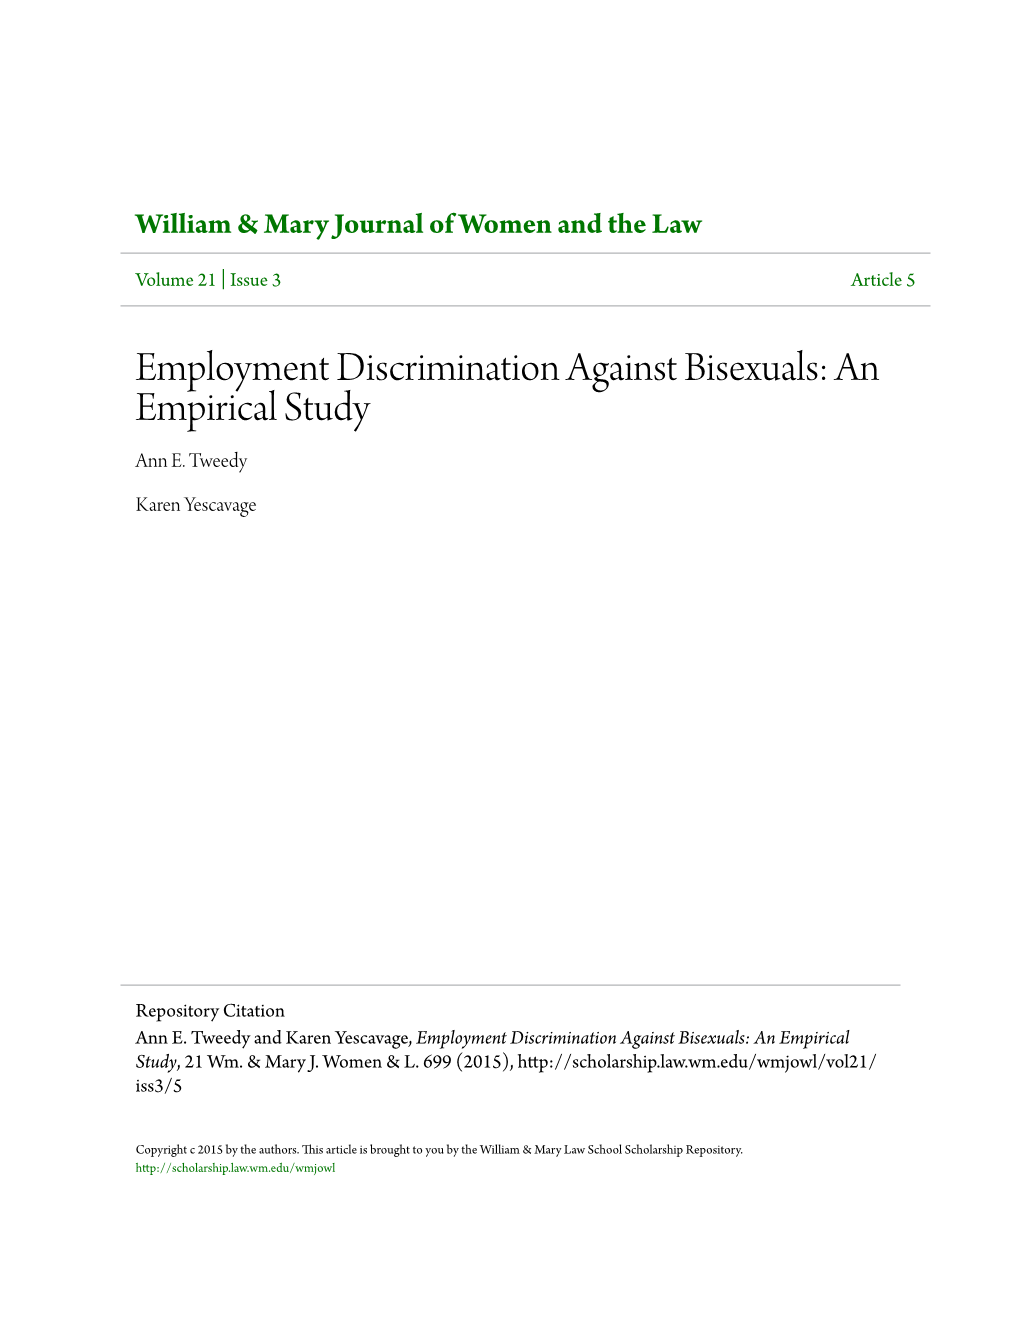 Employment Discrimination Against Bisexuals: an Empirical Study Ann E